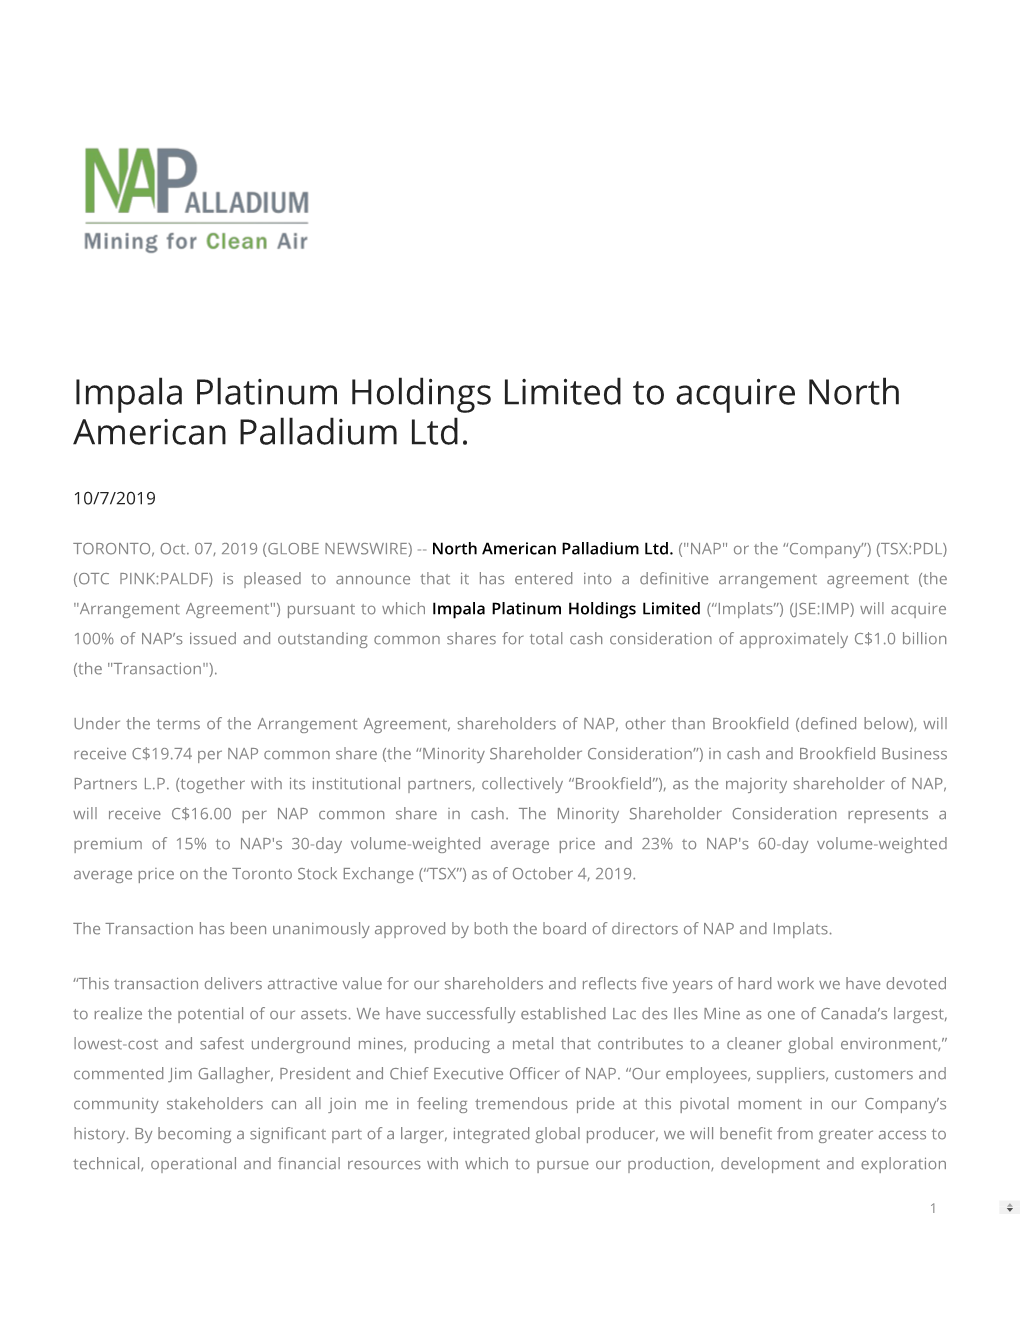 Impala Platinum Holdings Limited to Acquire North American Palladium Ltd